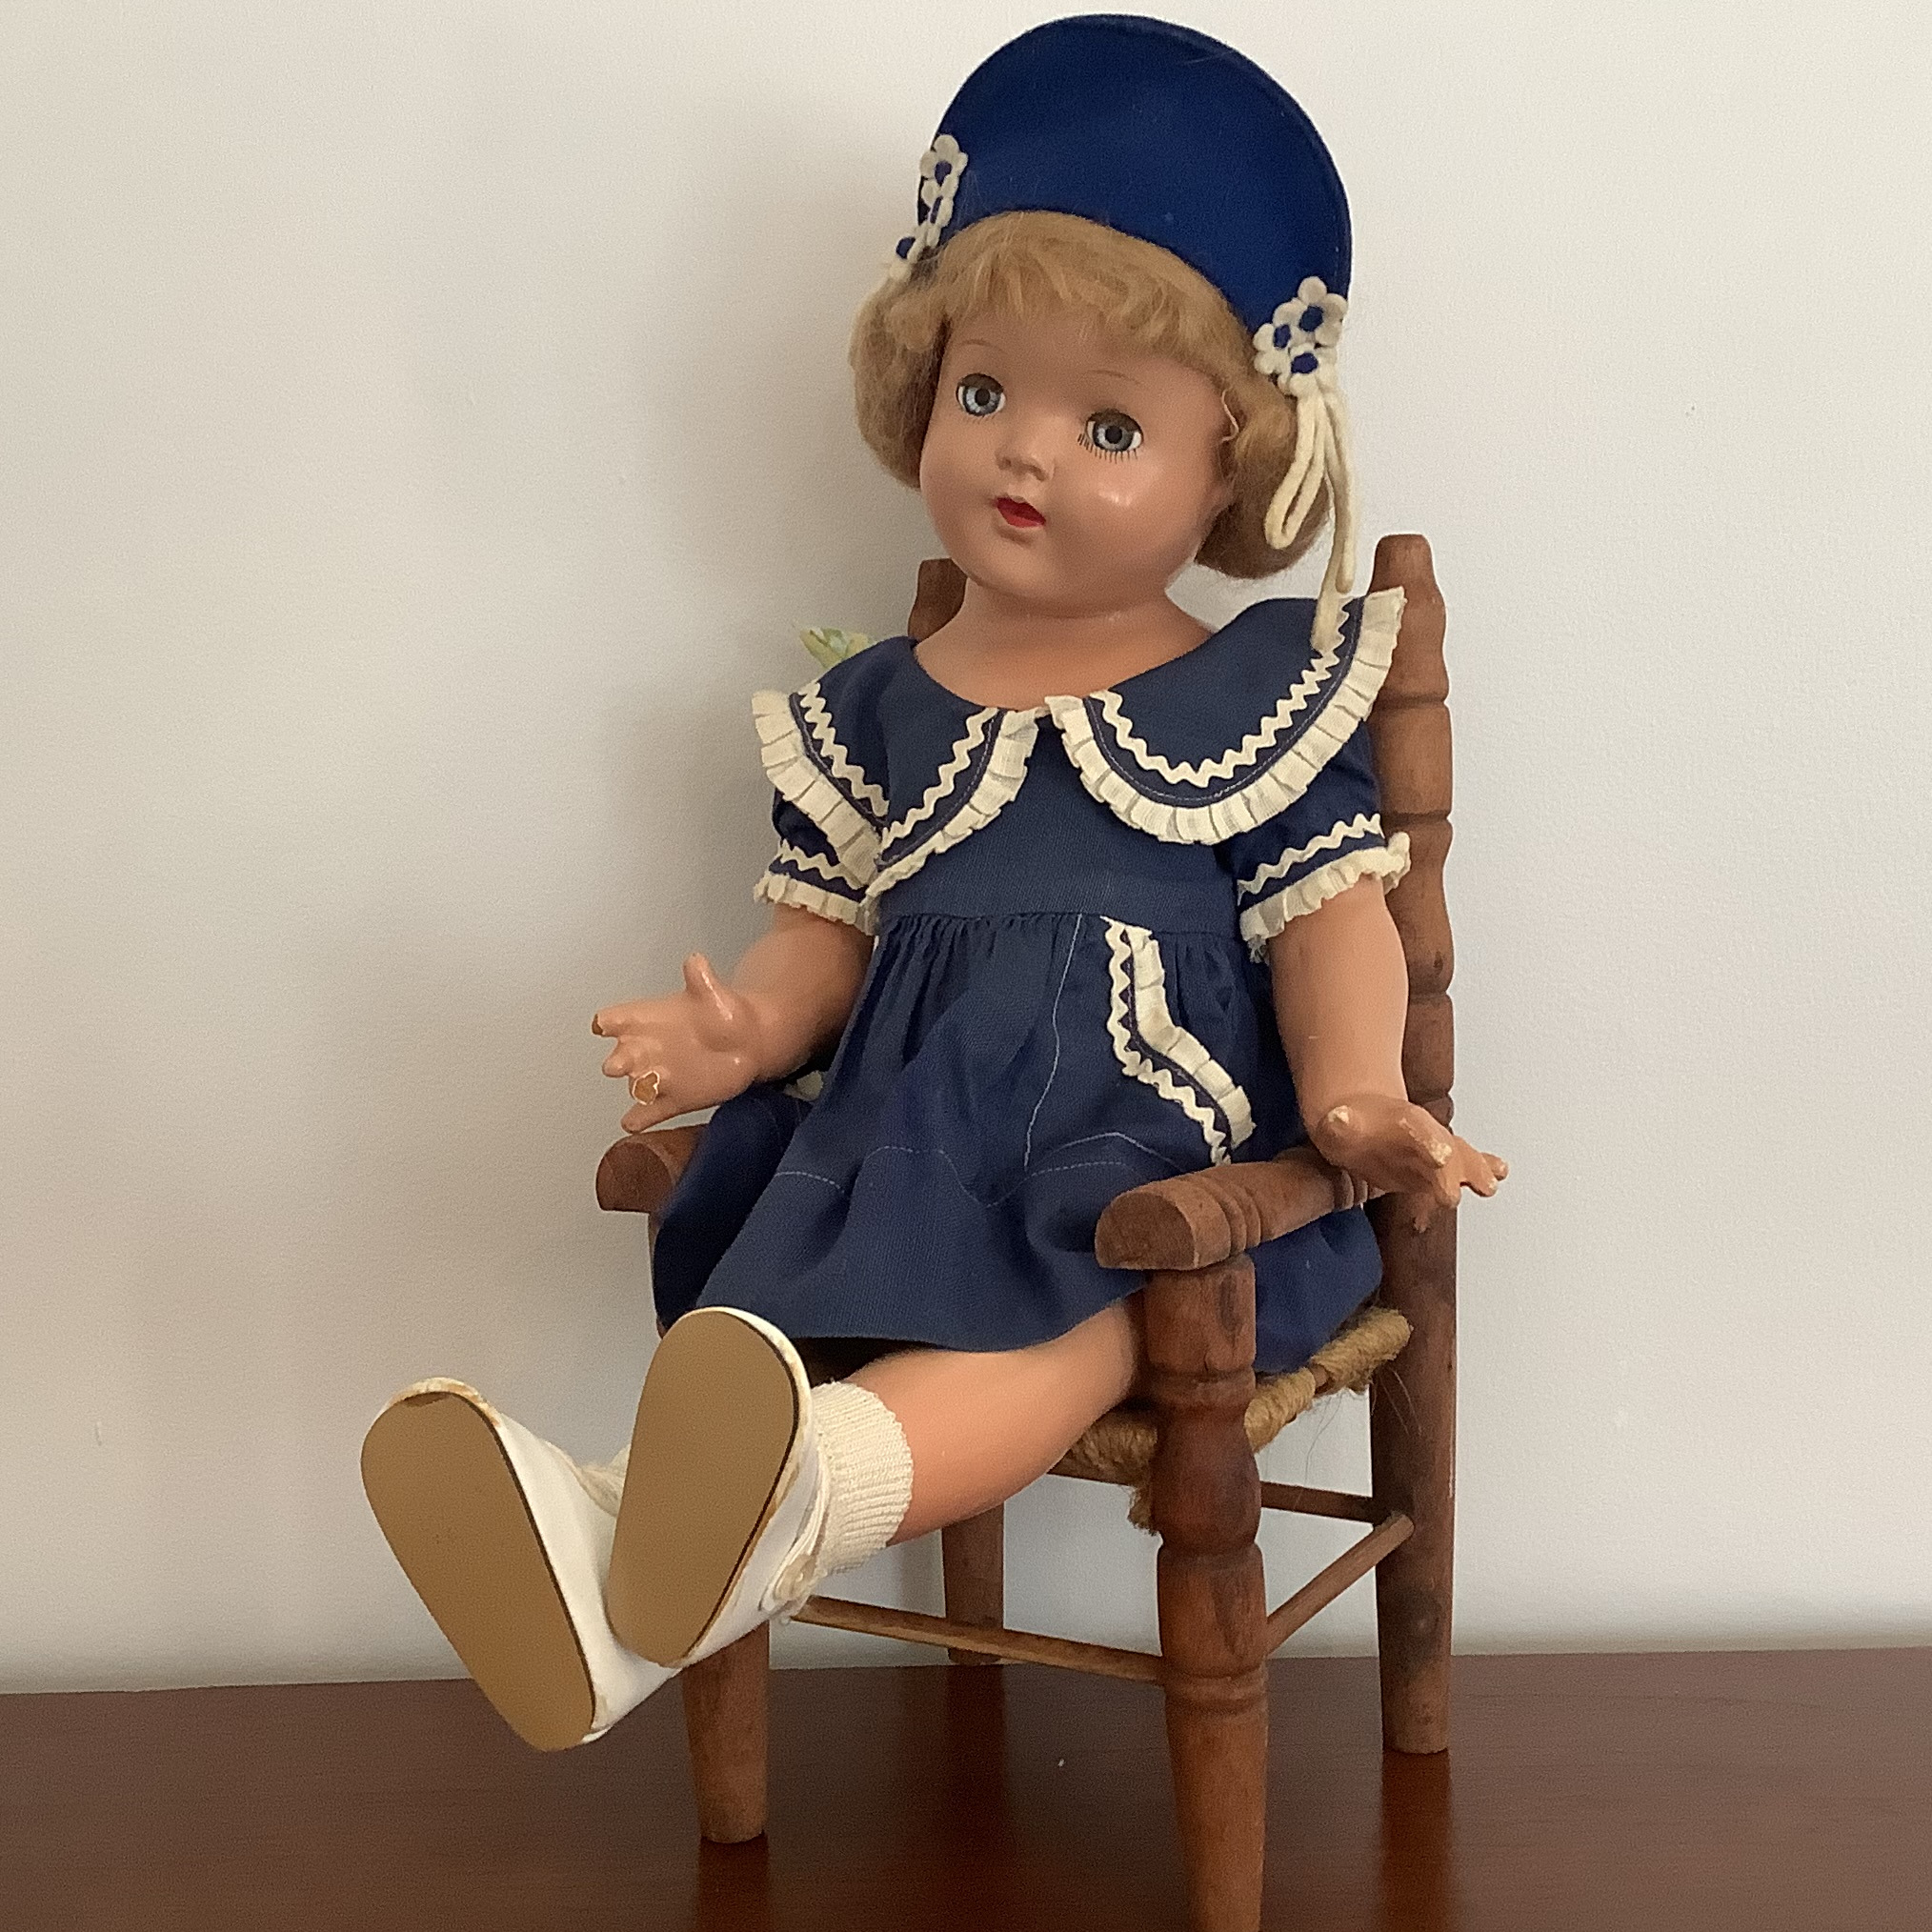 Sailor girl doll in blue minidress sitting in a miniature chair